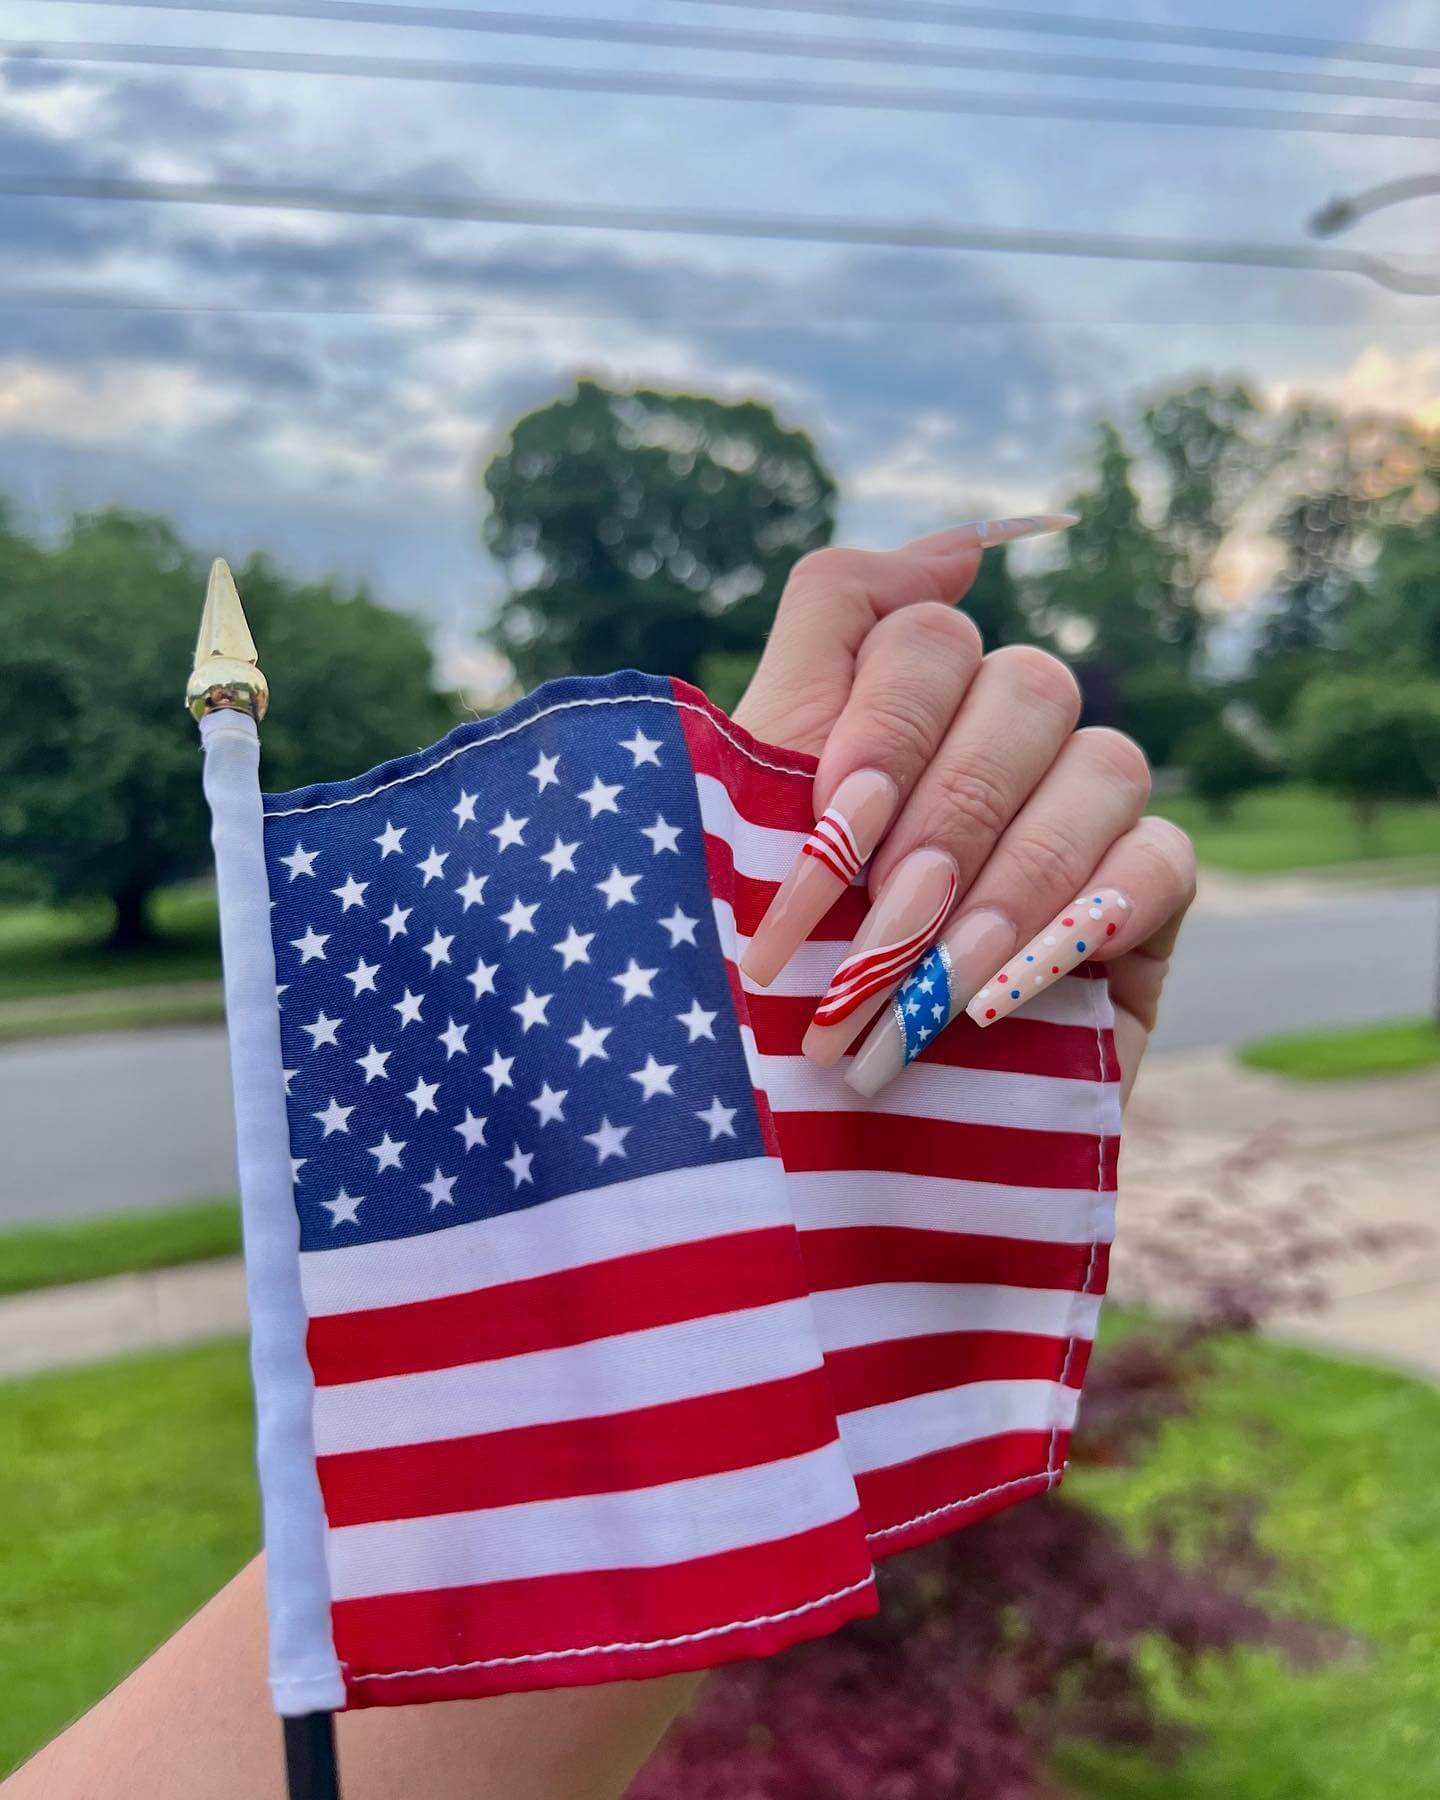 american flag Long Nails